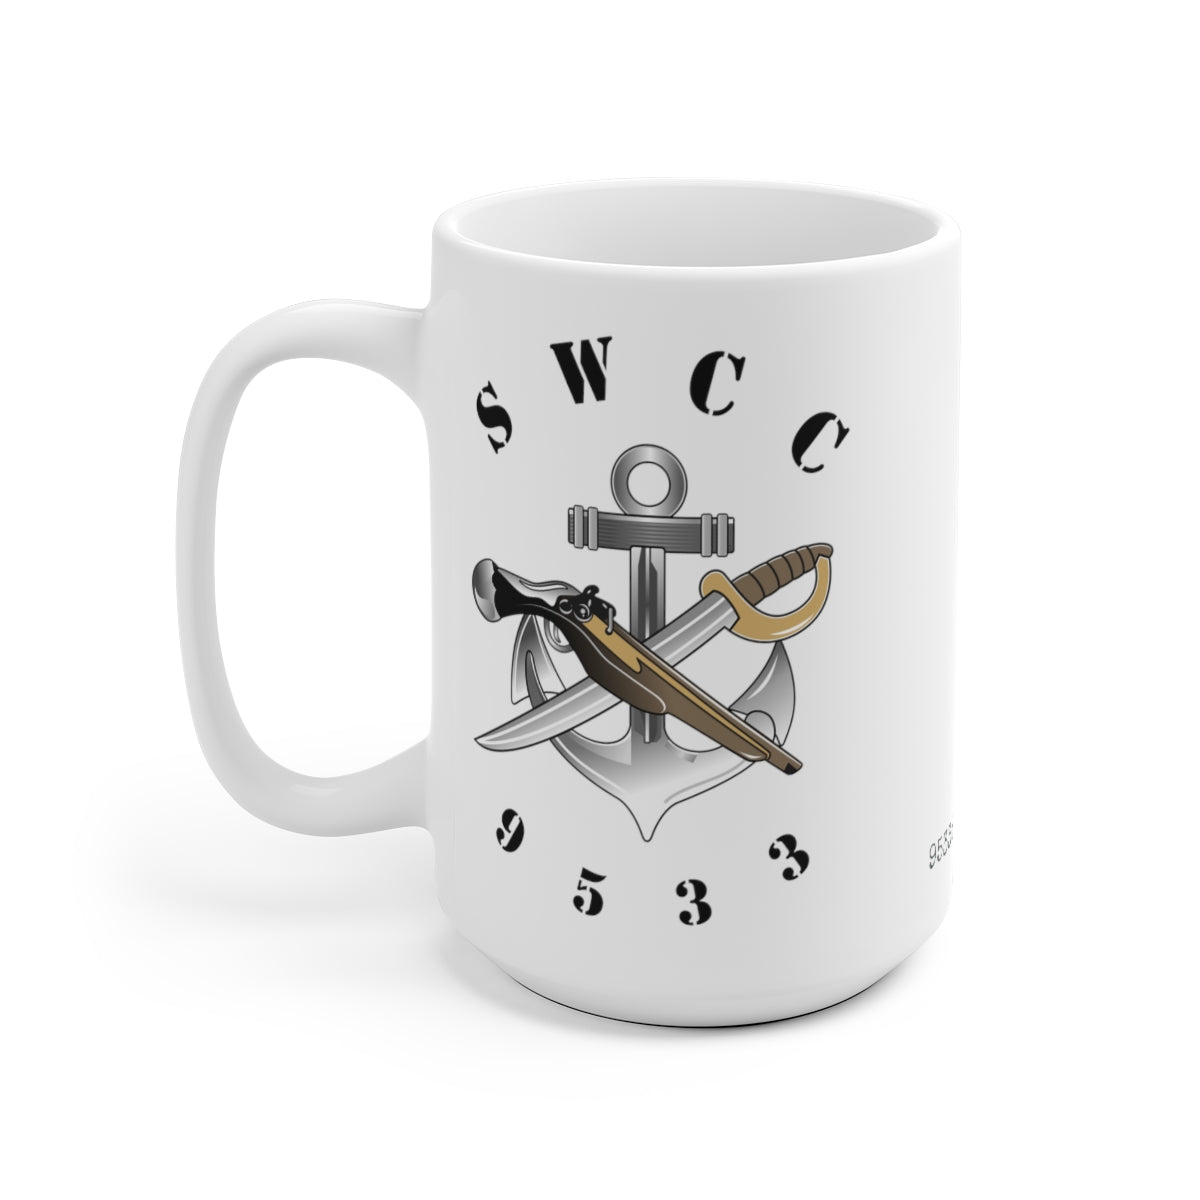 SWCC 9533 White 15oz Mug (Color)